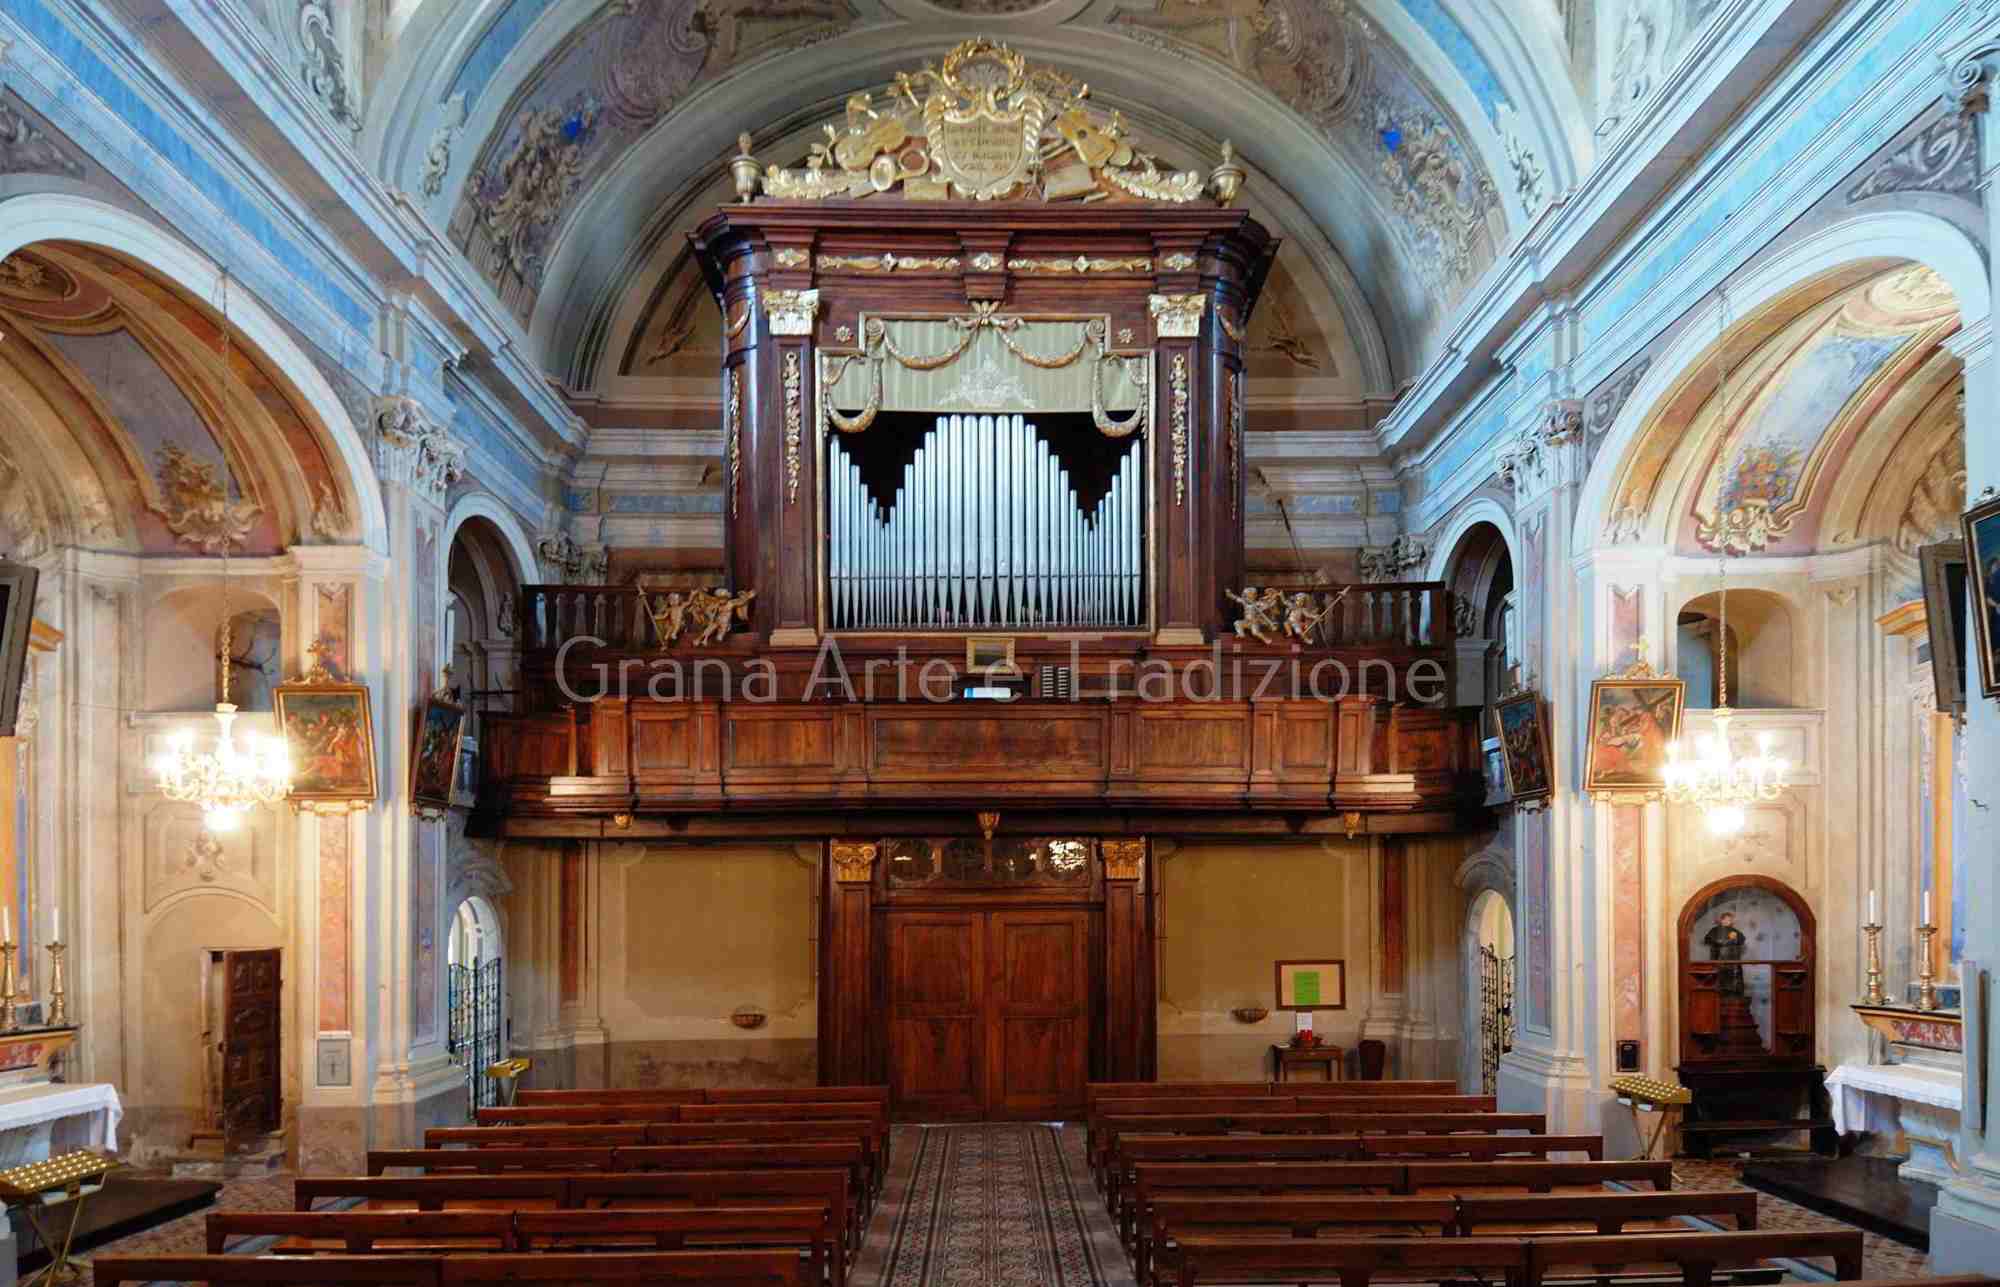 L'organo, la tribuna e la bussola